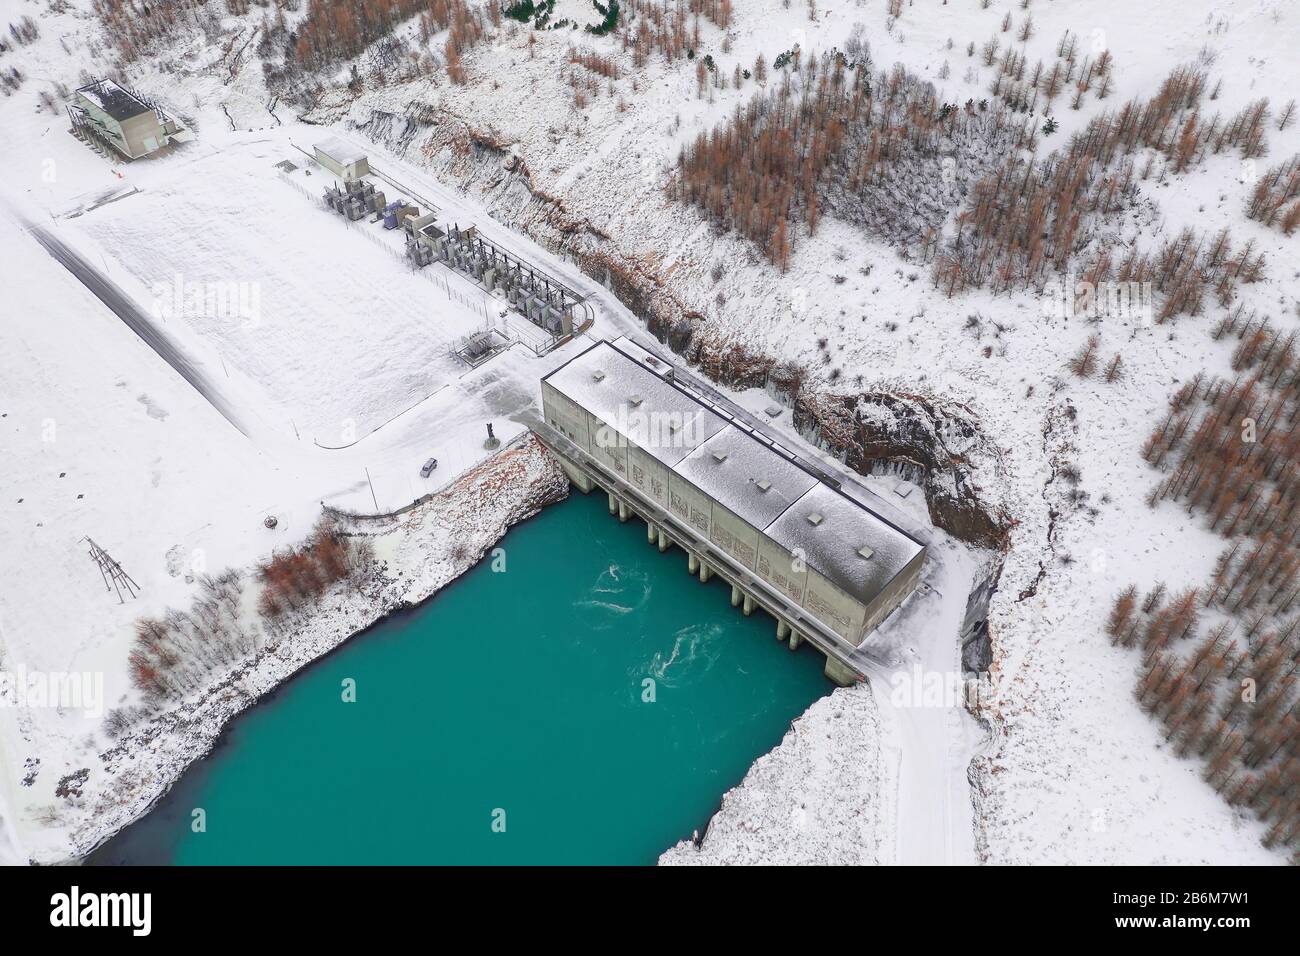 Kraftwerk Burfellsvirkjun Hydro, Thjorsardalur, Island Stockfoto